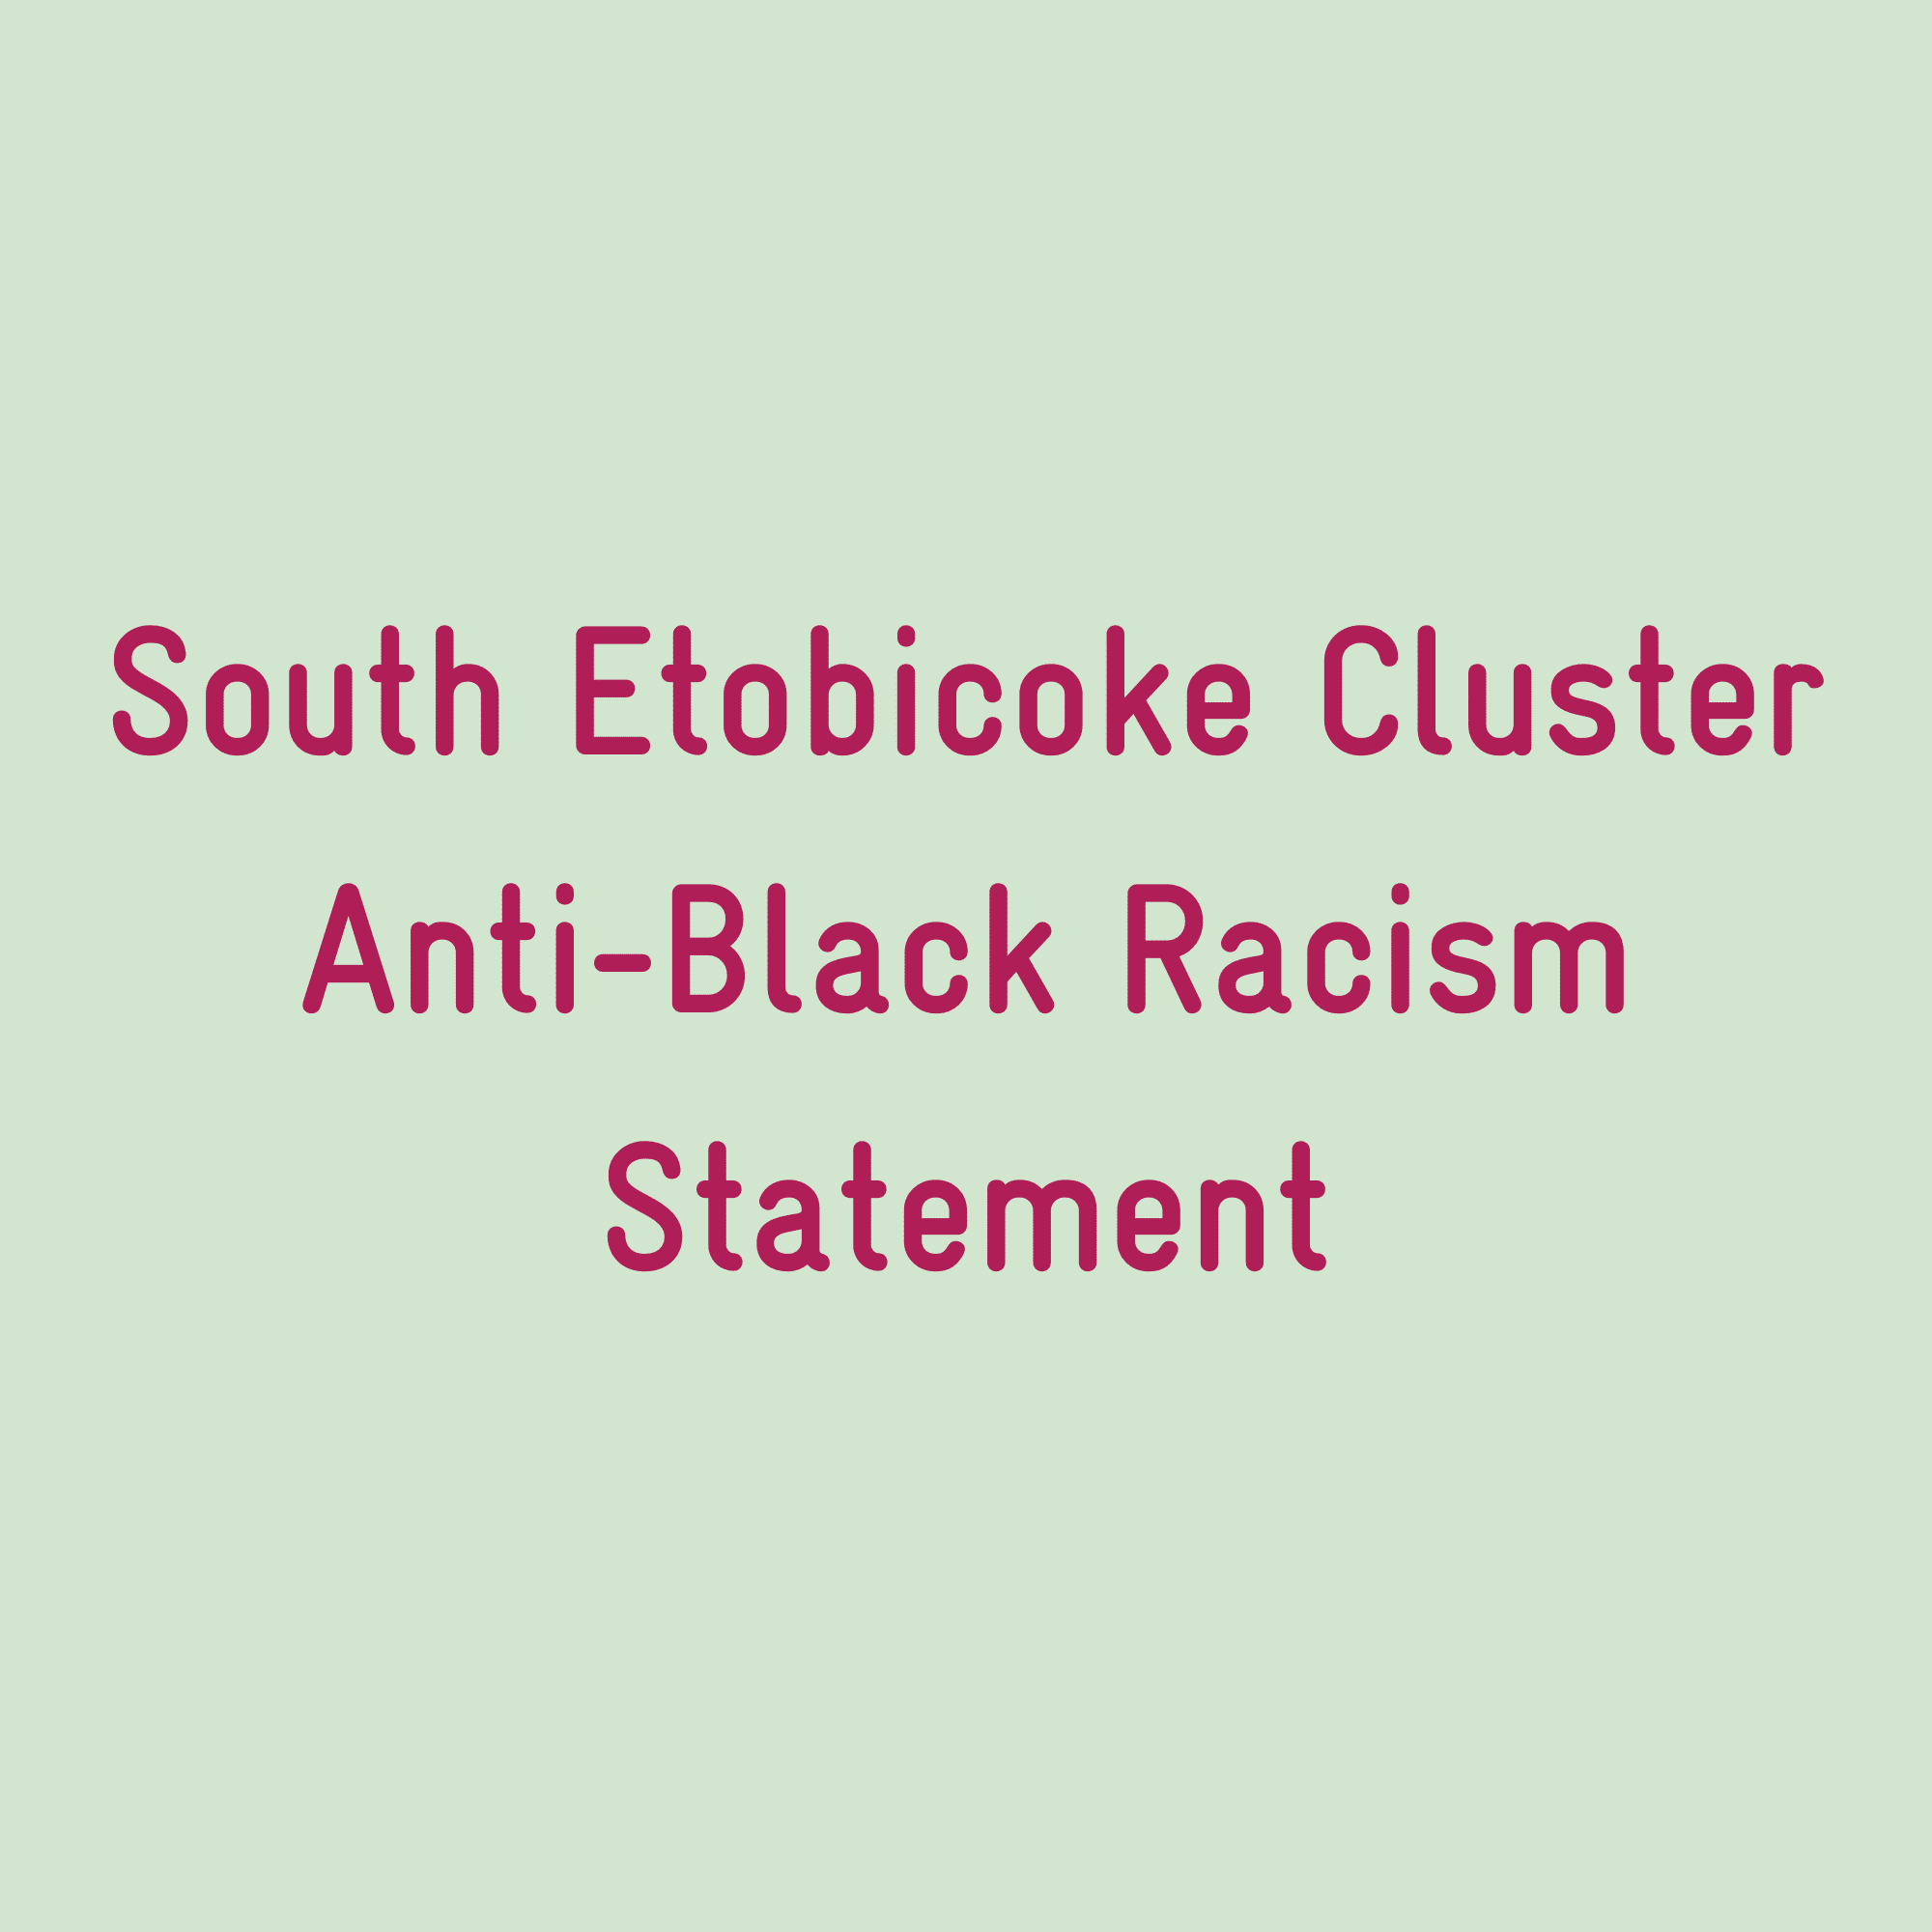 South Etobicoke Cluster Anti-Black Racism Statement